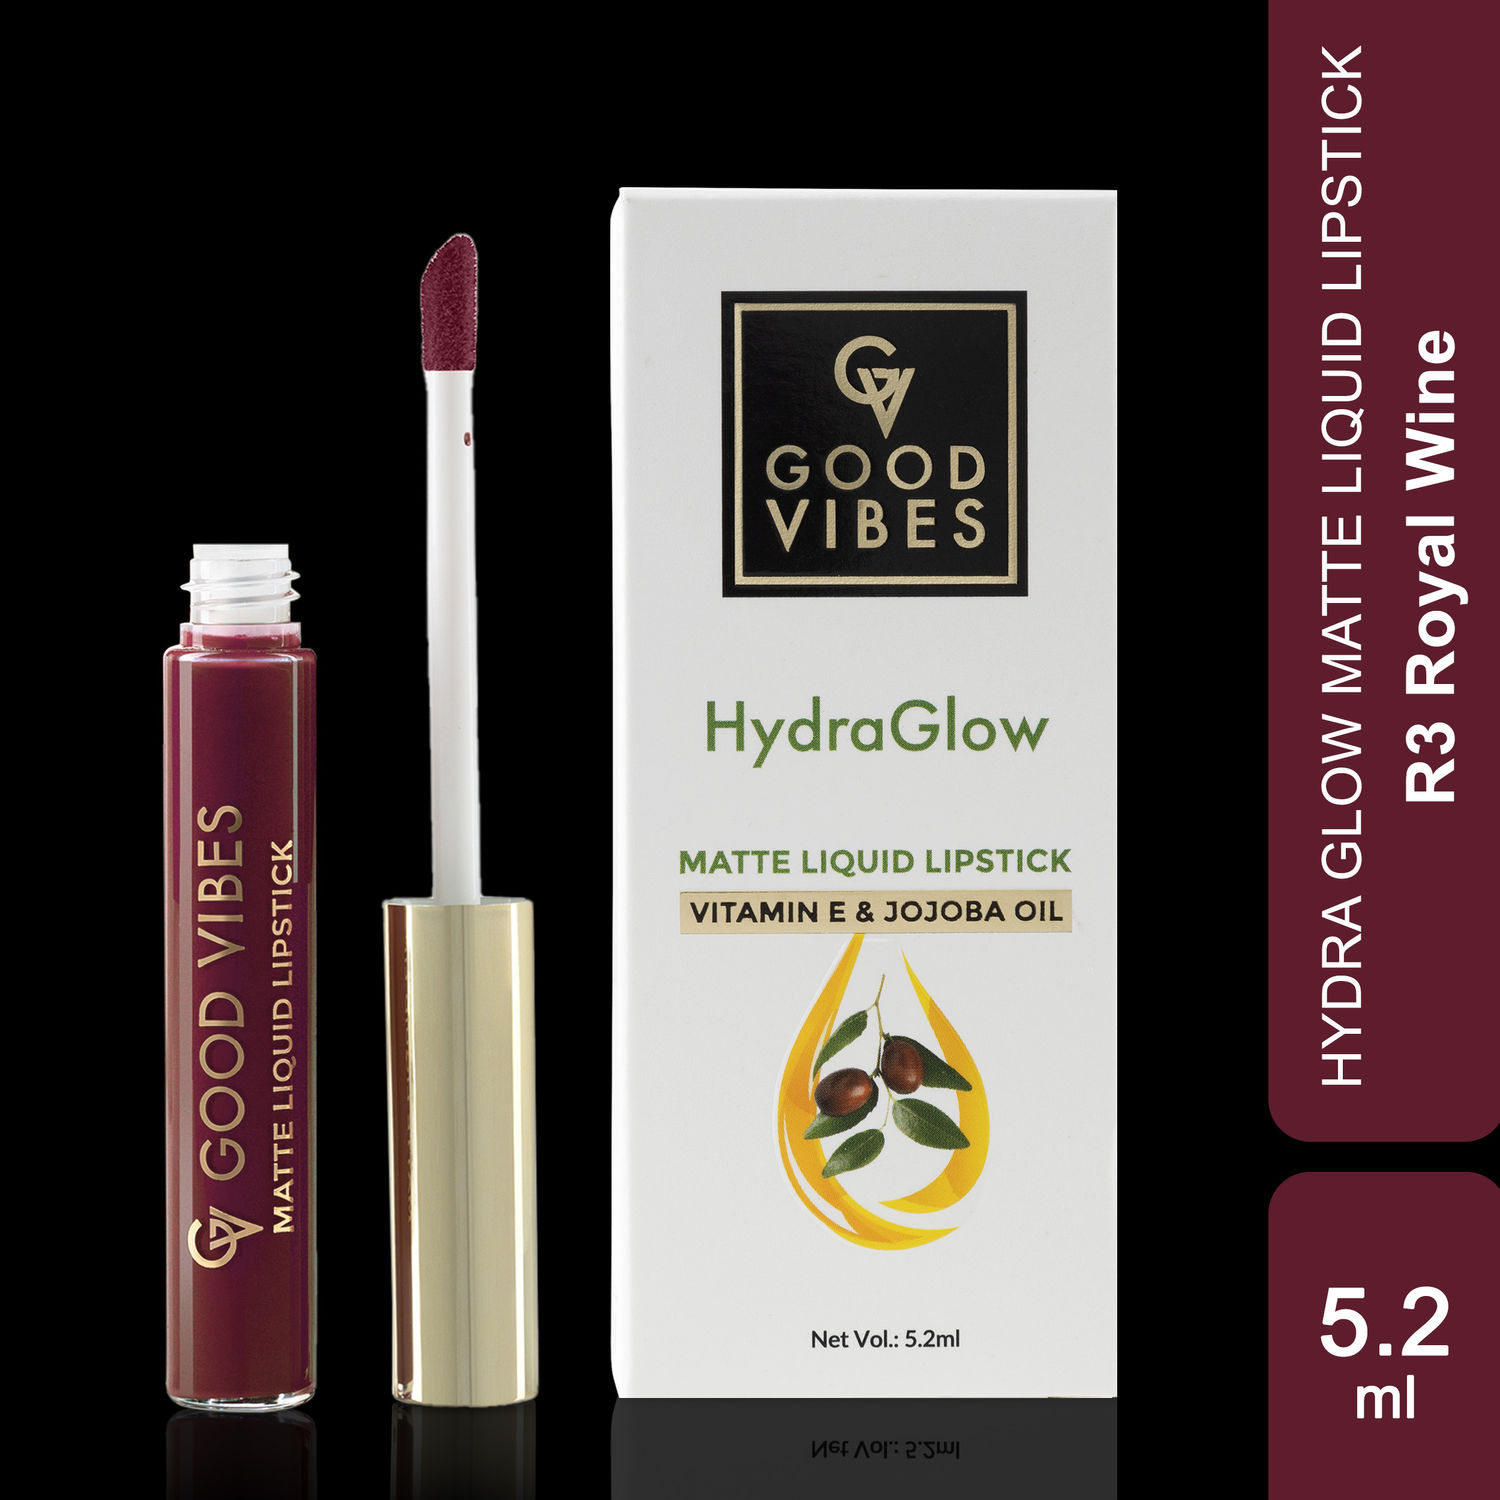 Good Vibes HydraGlow Matte Liquid Lipstick| Jojoba & Vitamin E| Royal Wine (R3) - (5.2ml)